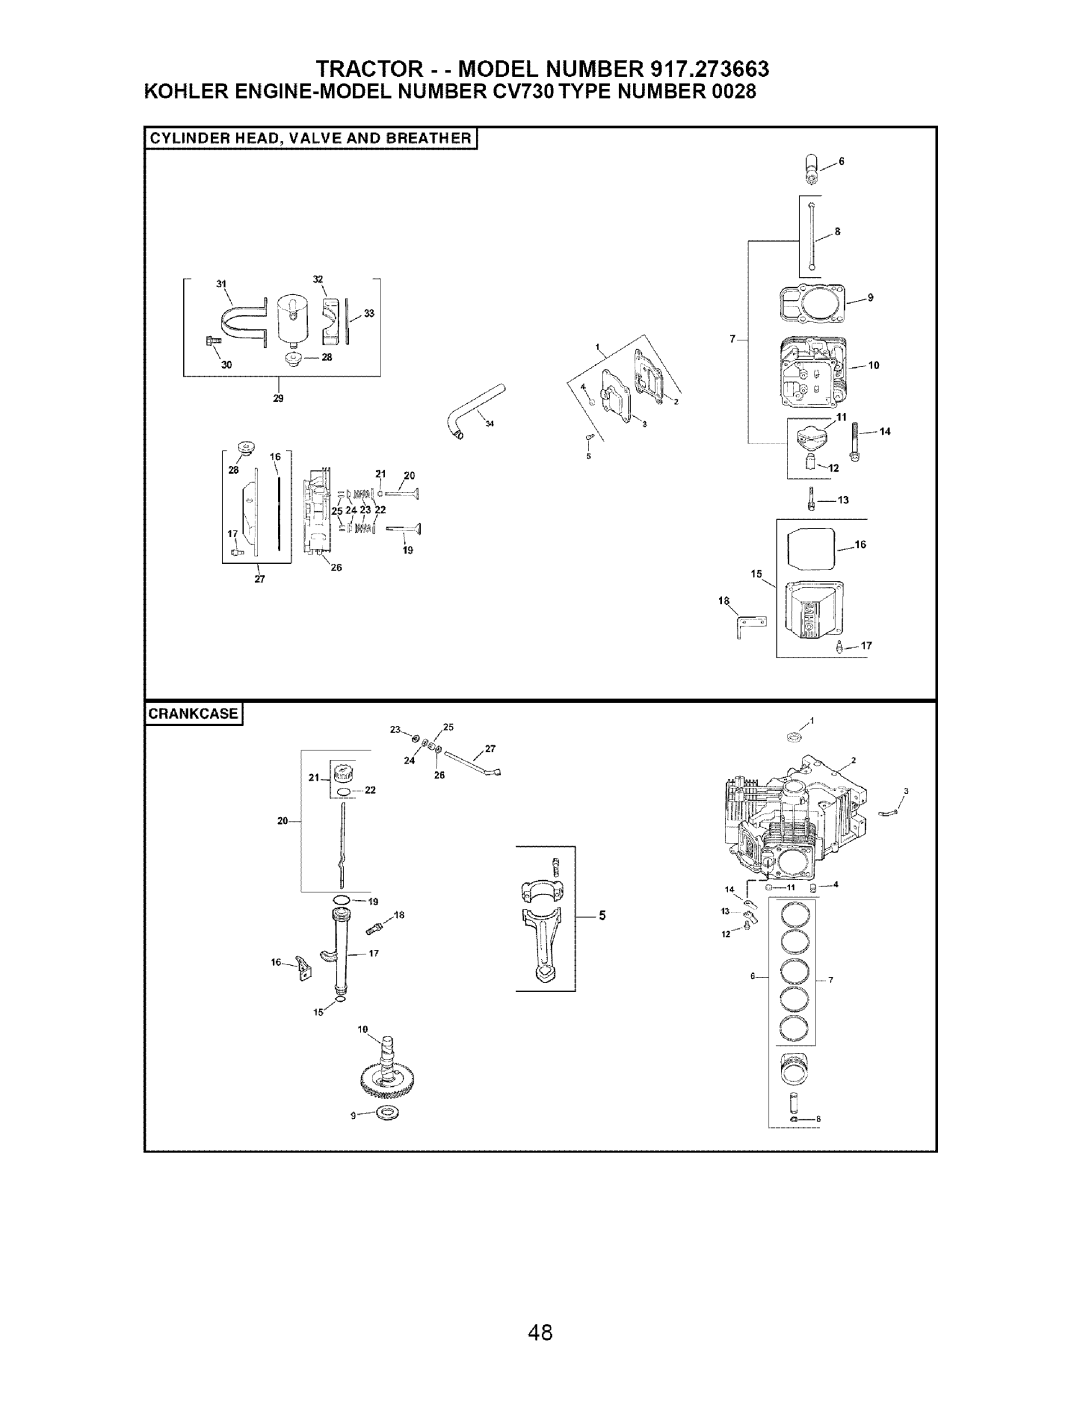 Craftsman 917.273663 owner manual Cylinderhead, Valveand Breather, Crankcasej, 16 15, 23_@ /25, 20--l, 15 10 